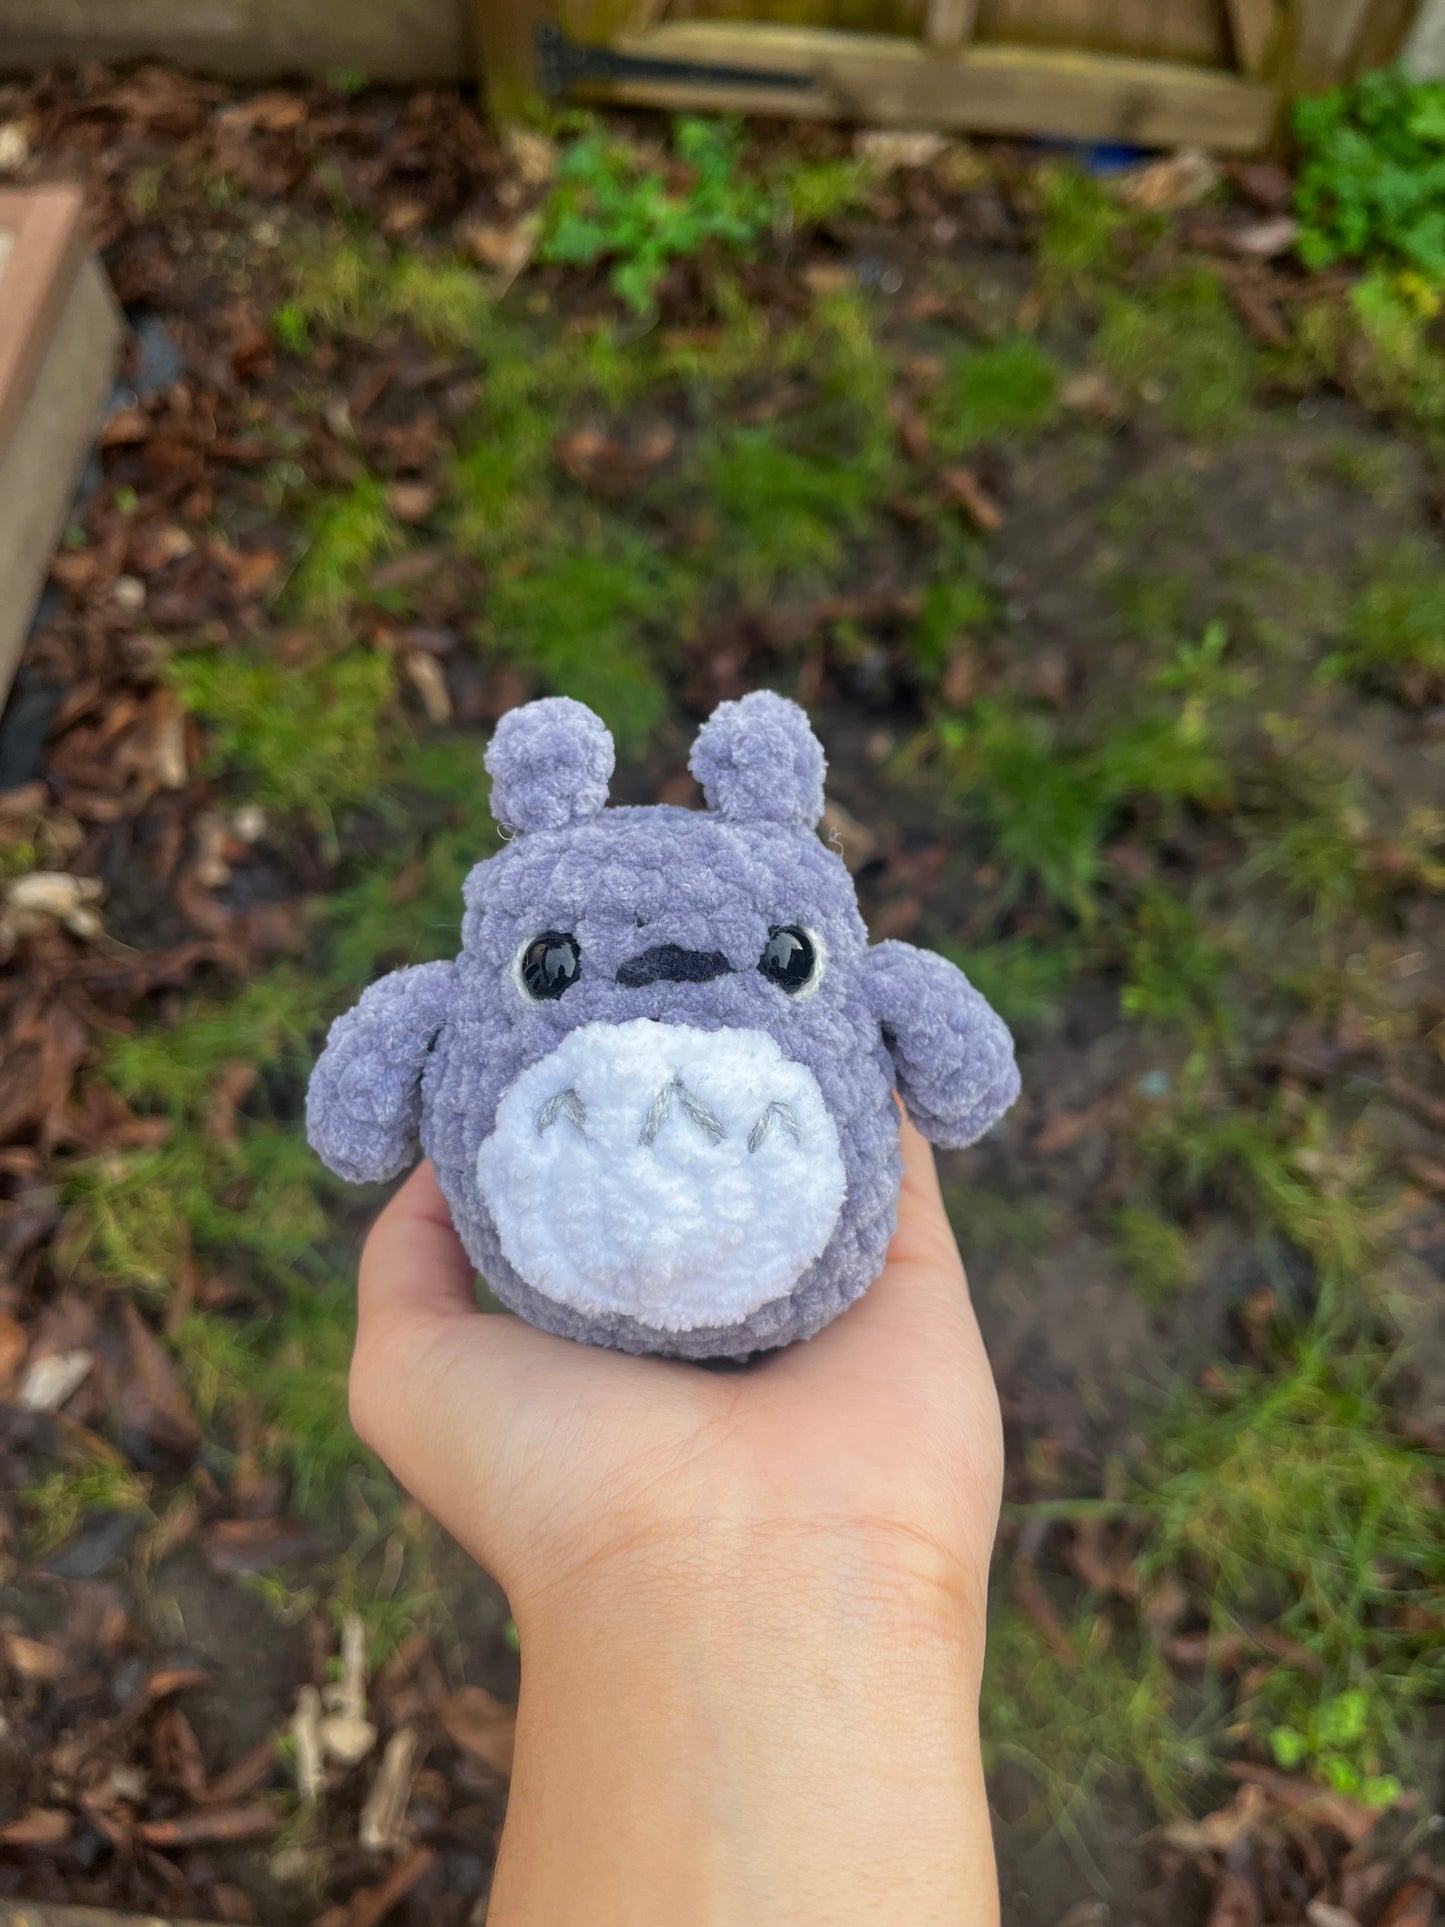 Free pattern - Totoro -beginner friendly